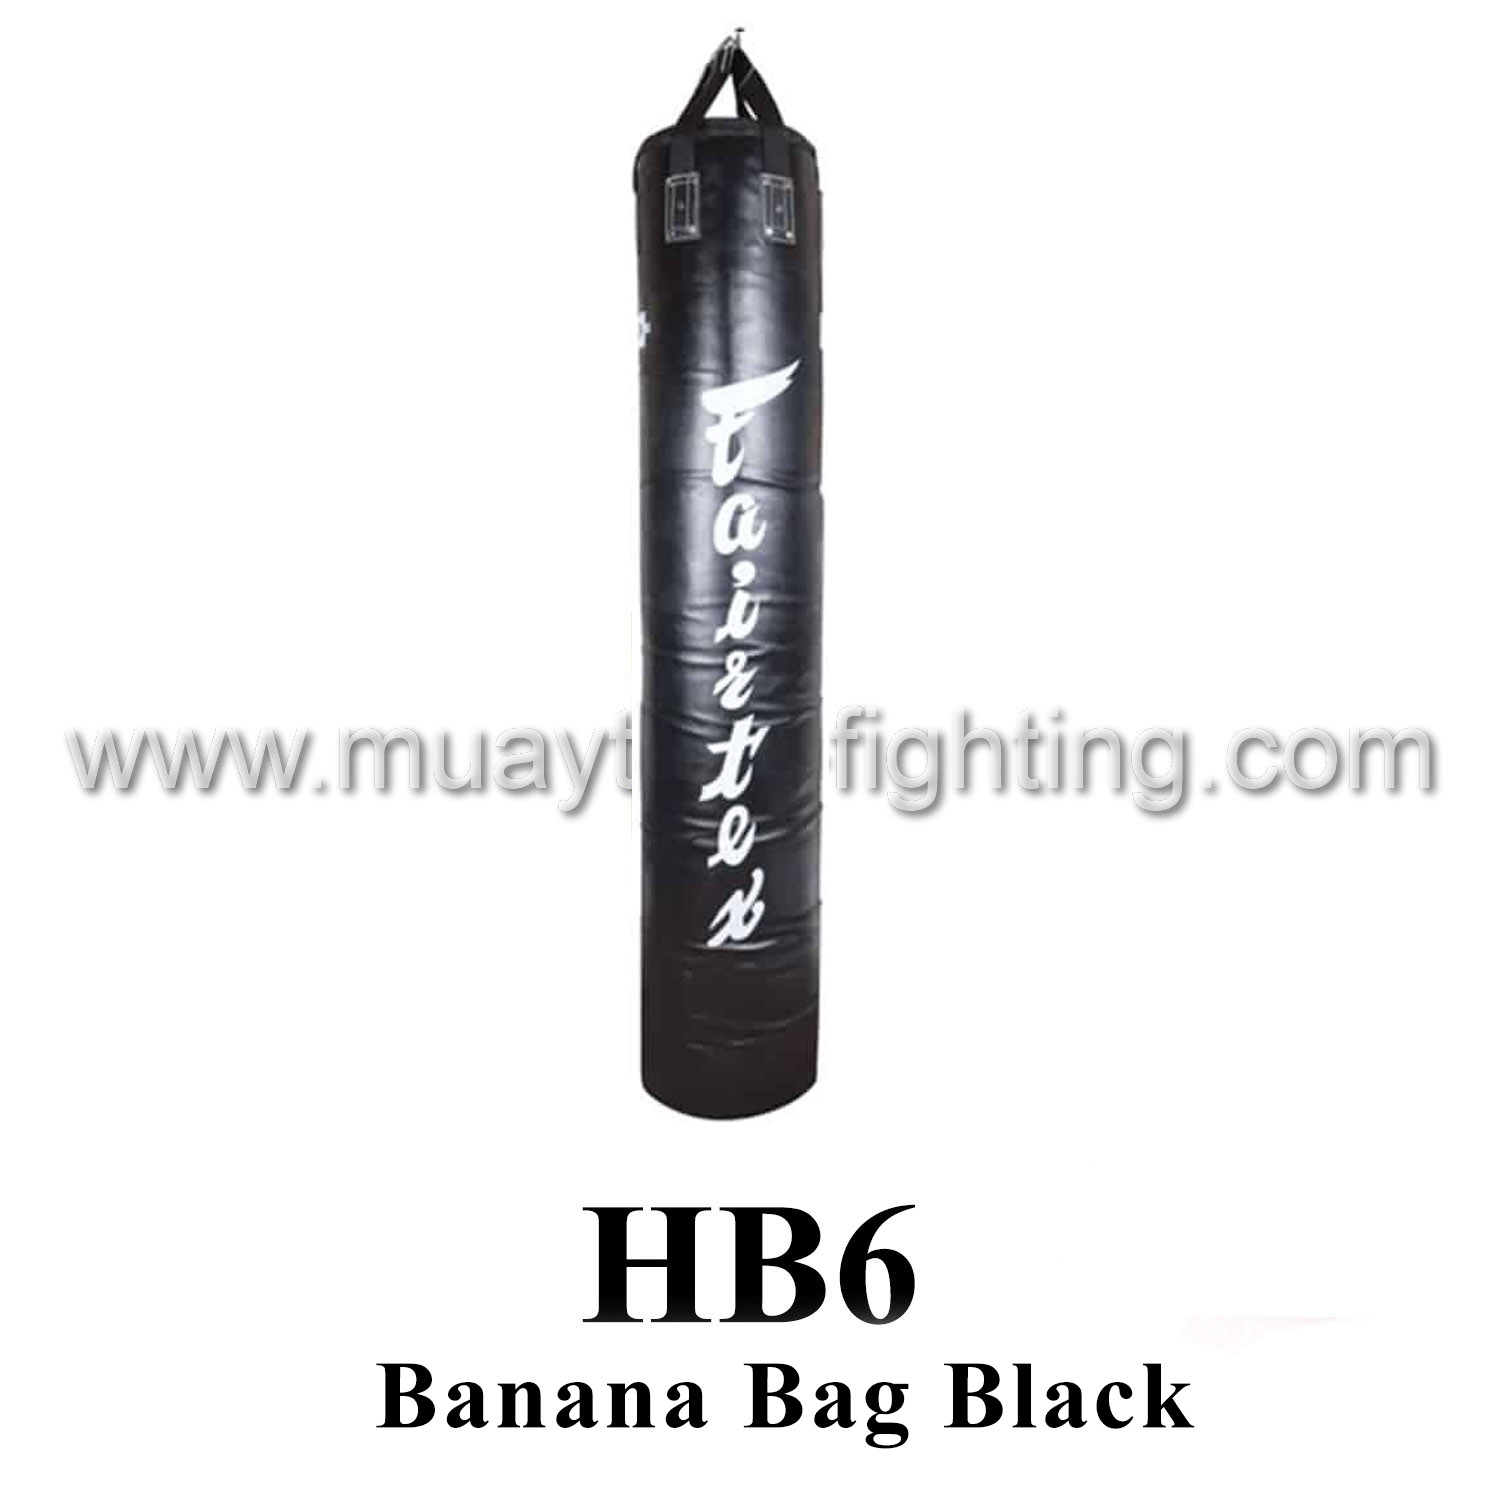 Details about   Fairtex HB6 Black 6ft Muay Thai Banana Bag UNFILLED Training Punch Heavy Bag 